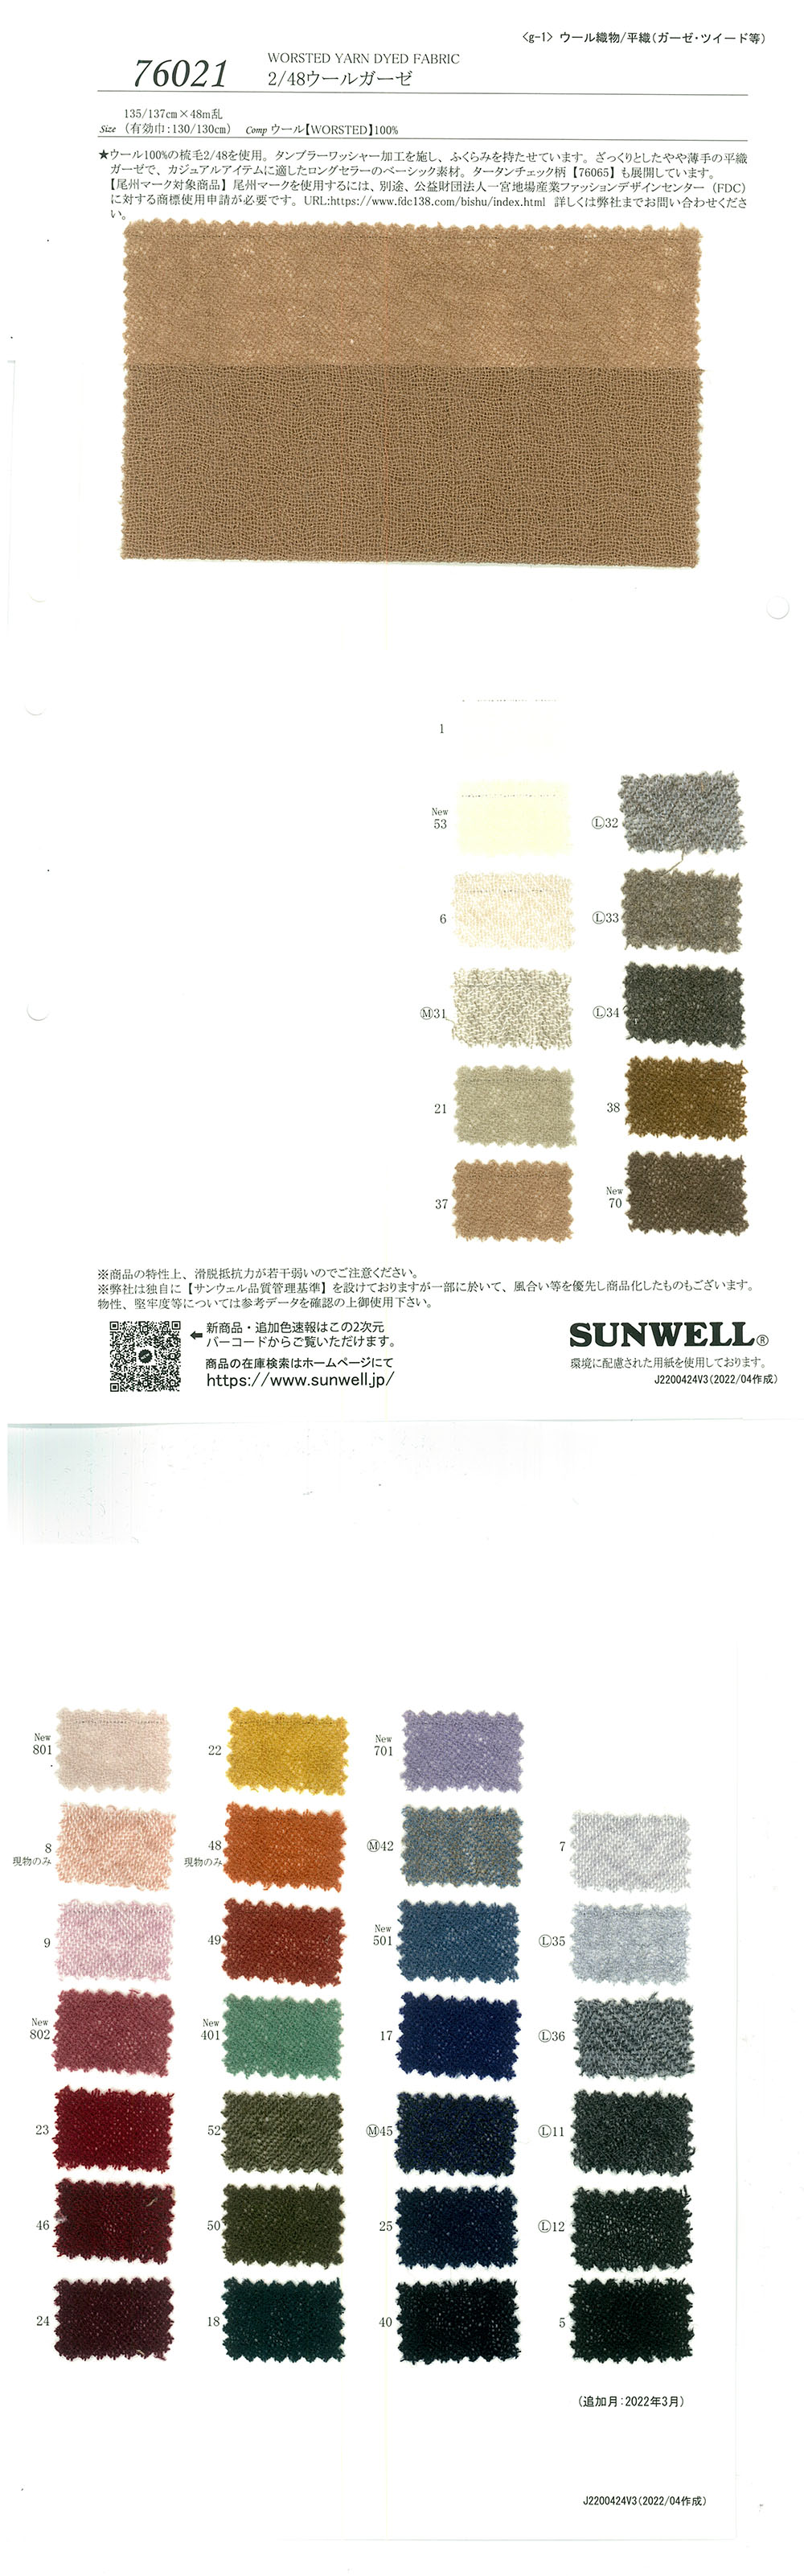 76021 2/48 Wool Gauze[Textile / Fabric] SUNWELL